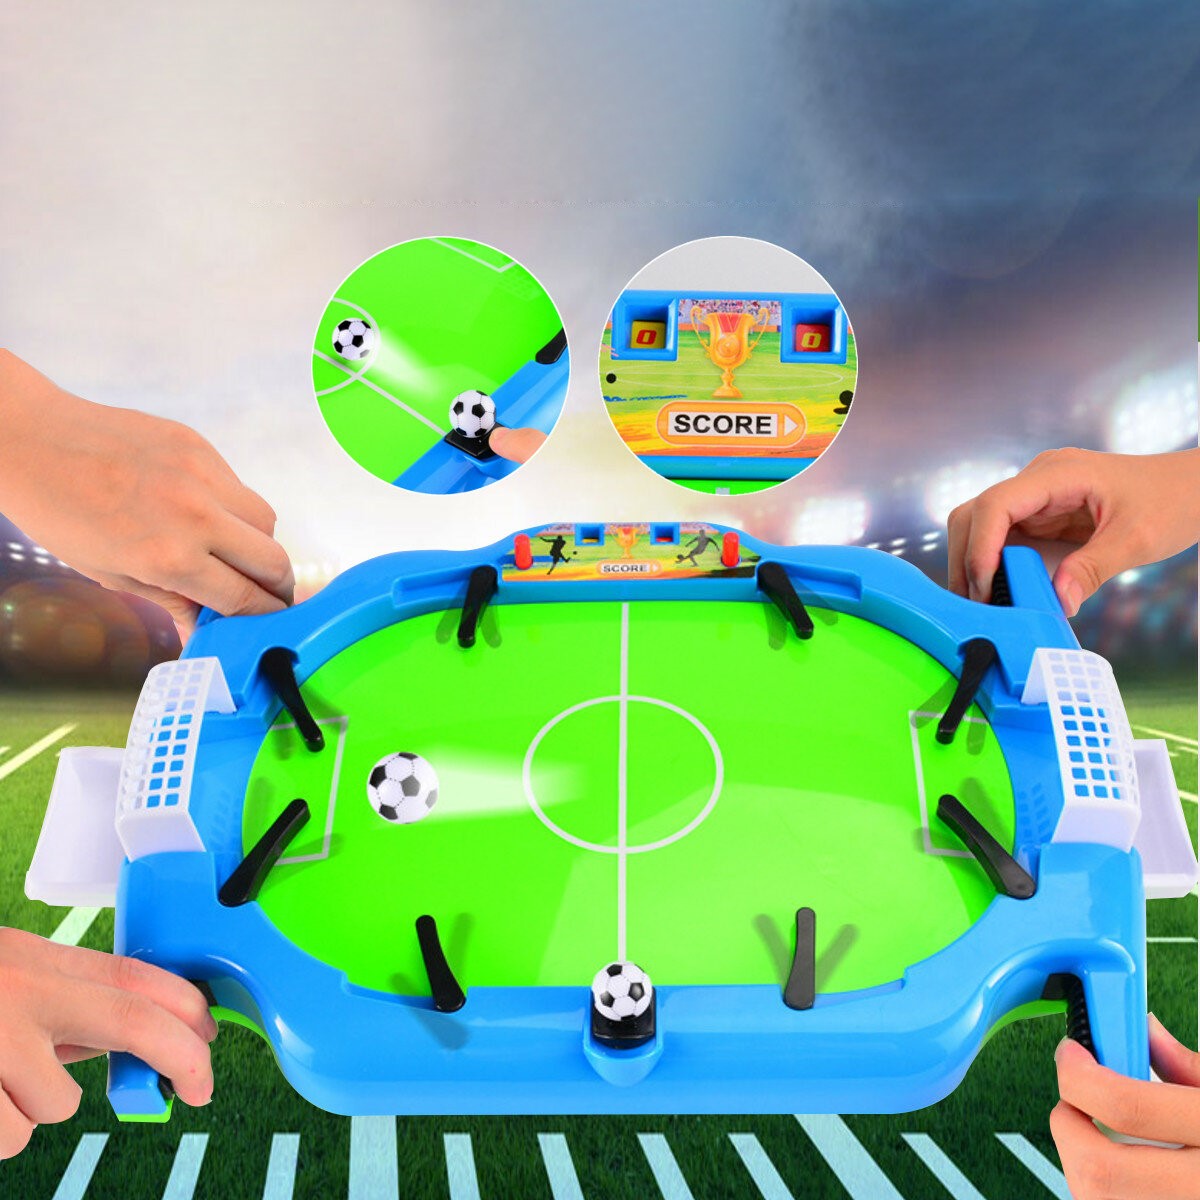 Jeu de football interactif : Le meilleur jouet football challenge à utiliser